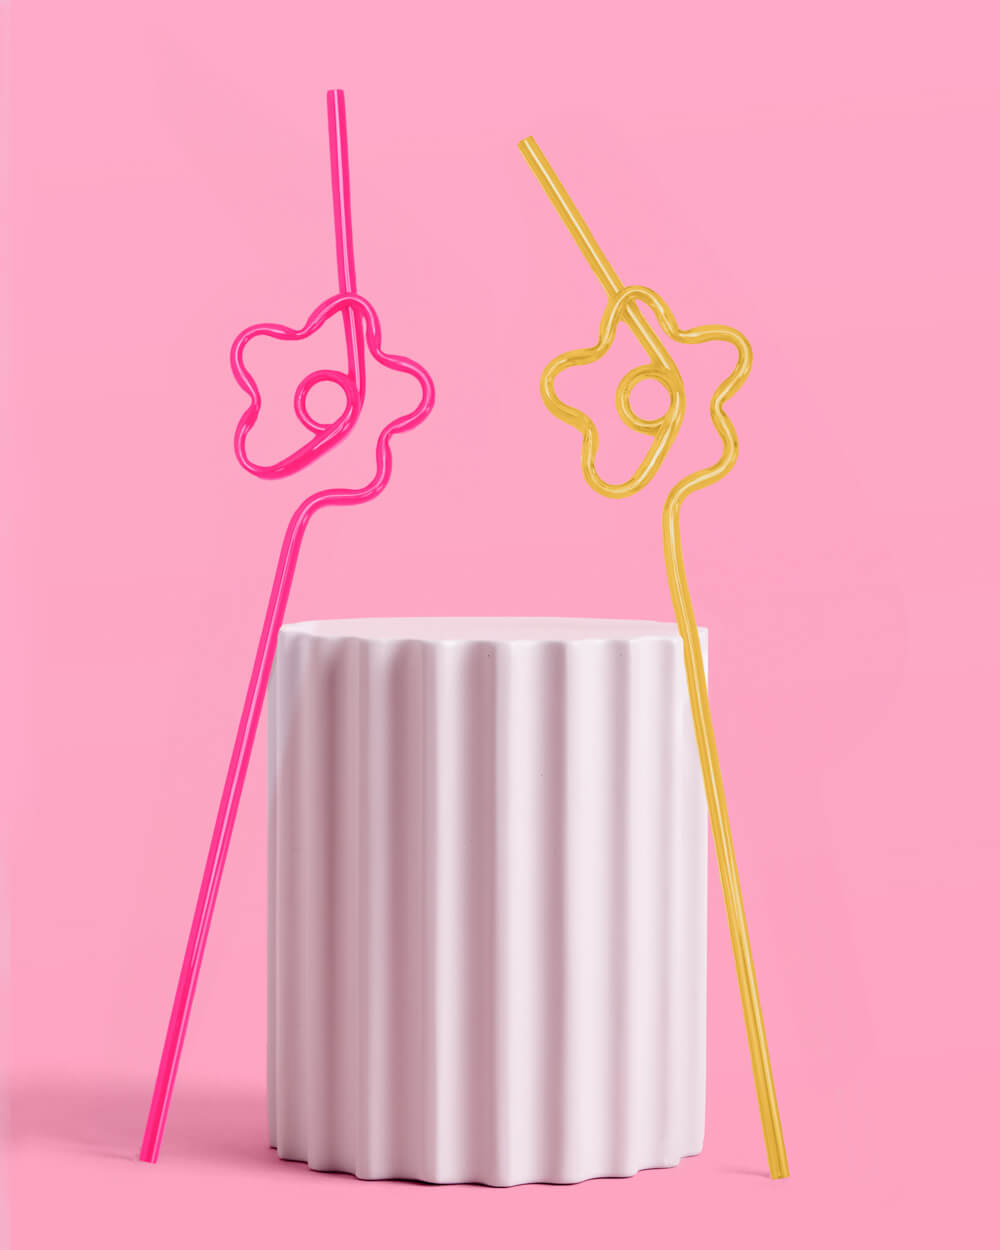 Flower Power Straws - 20 reusable straws